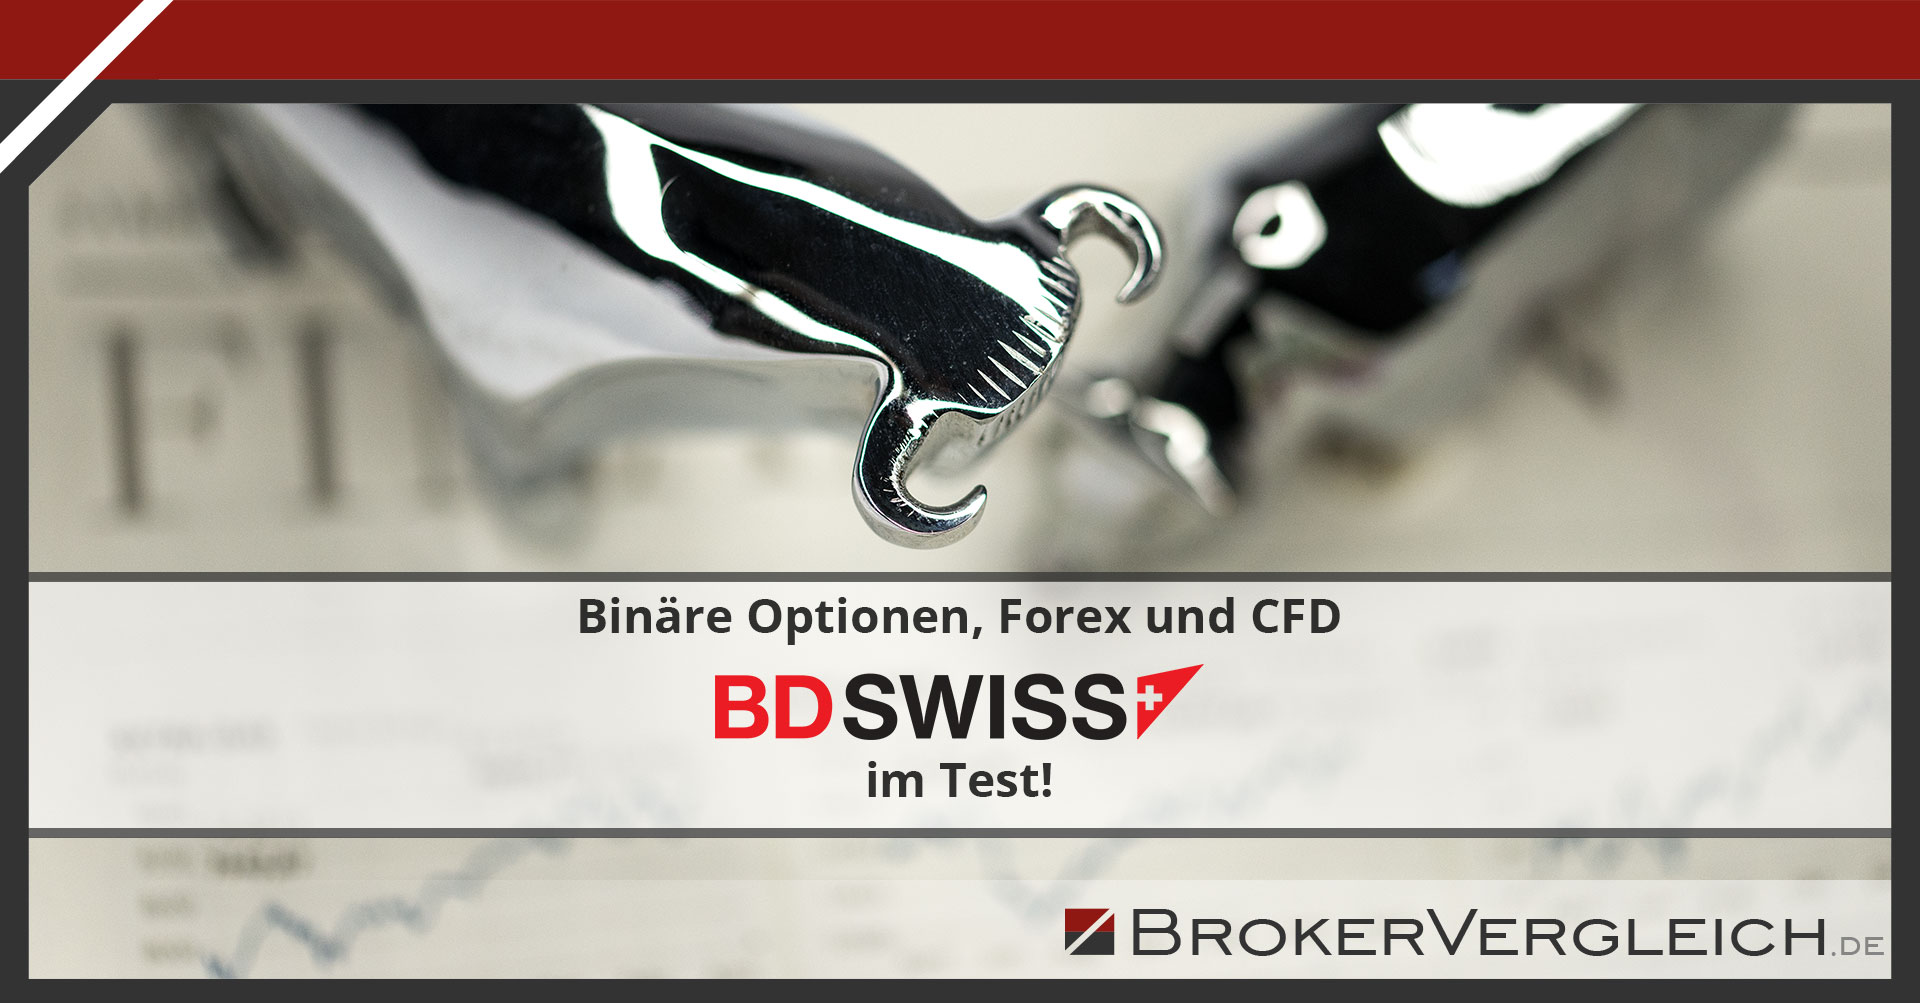 bdswiss forex im test erfahrungen mit dem forex broker cfd trading and share trading